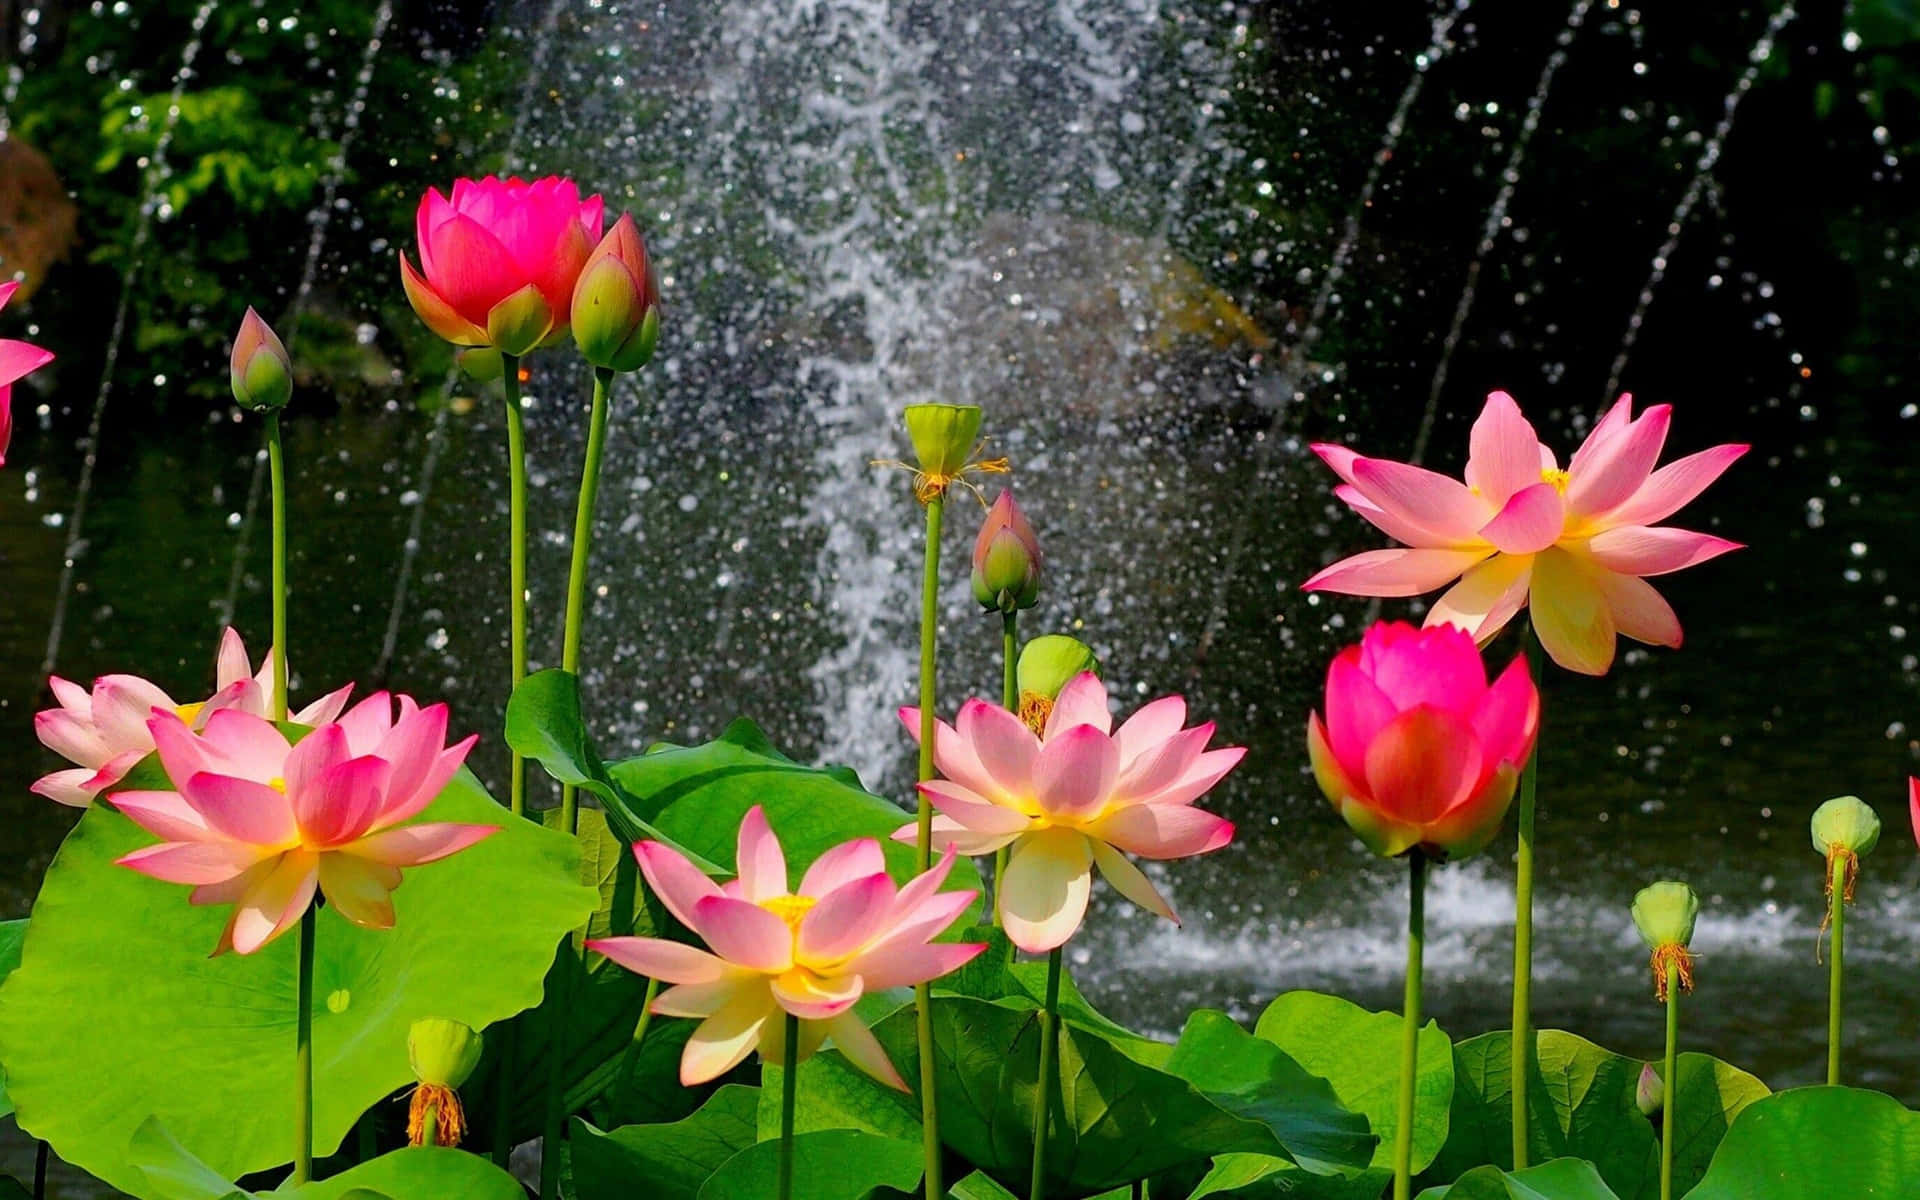 Caption: Serene Beauty Of A Lotus Blossom